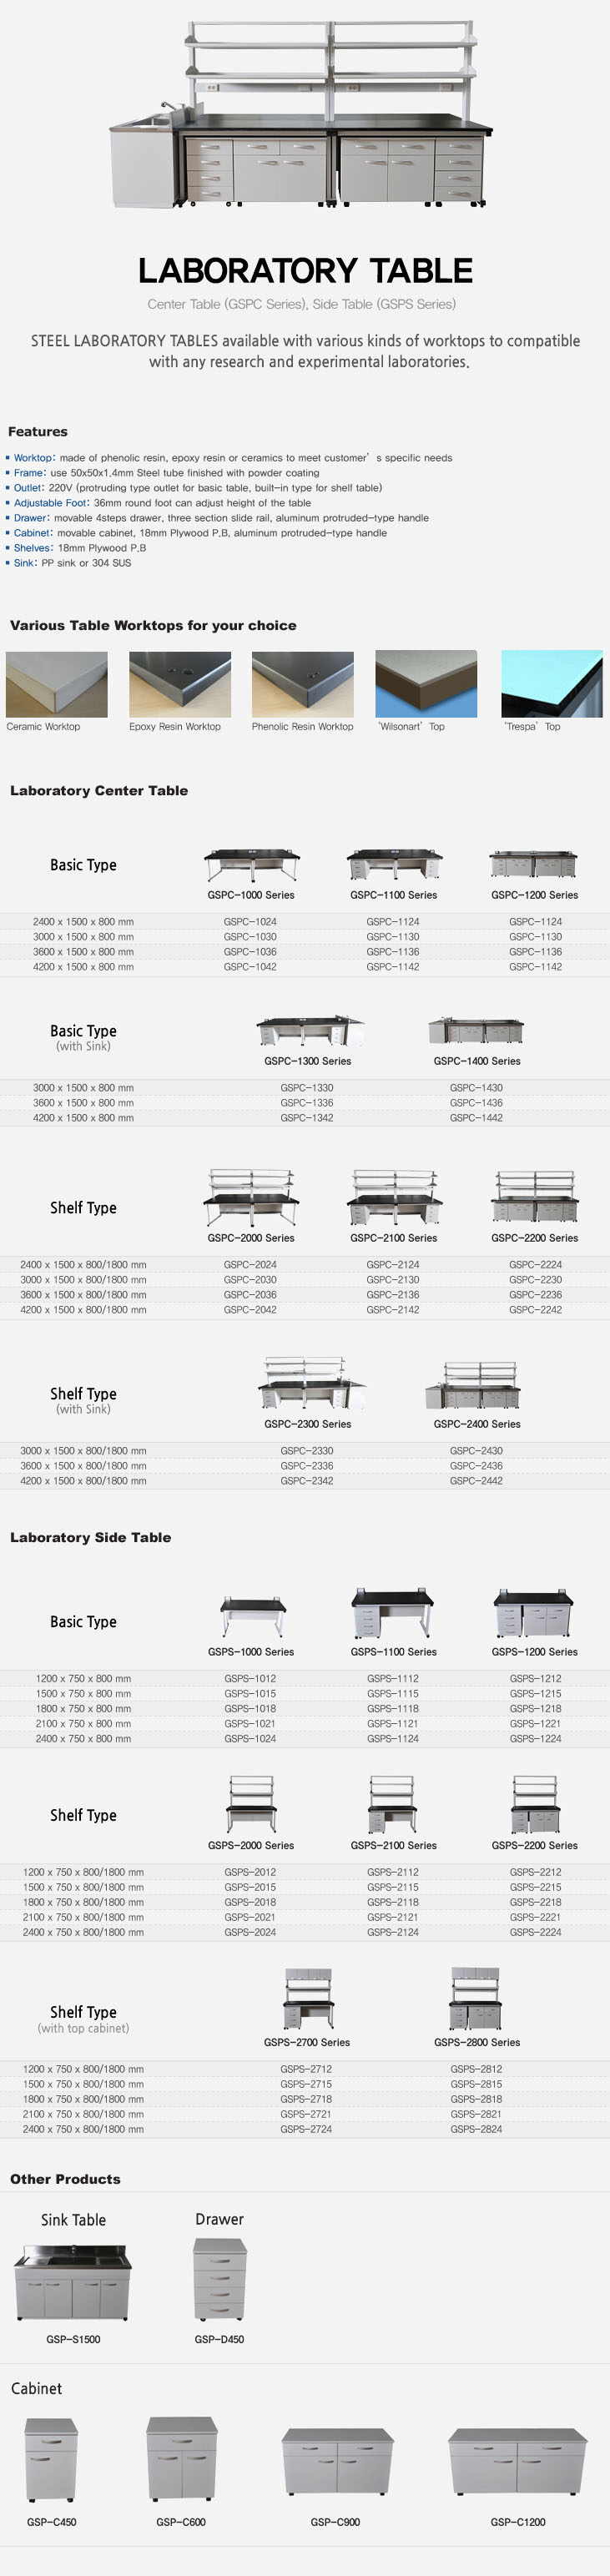 laboratory-table